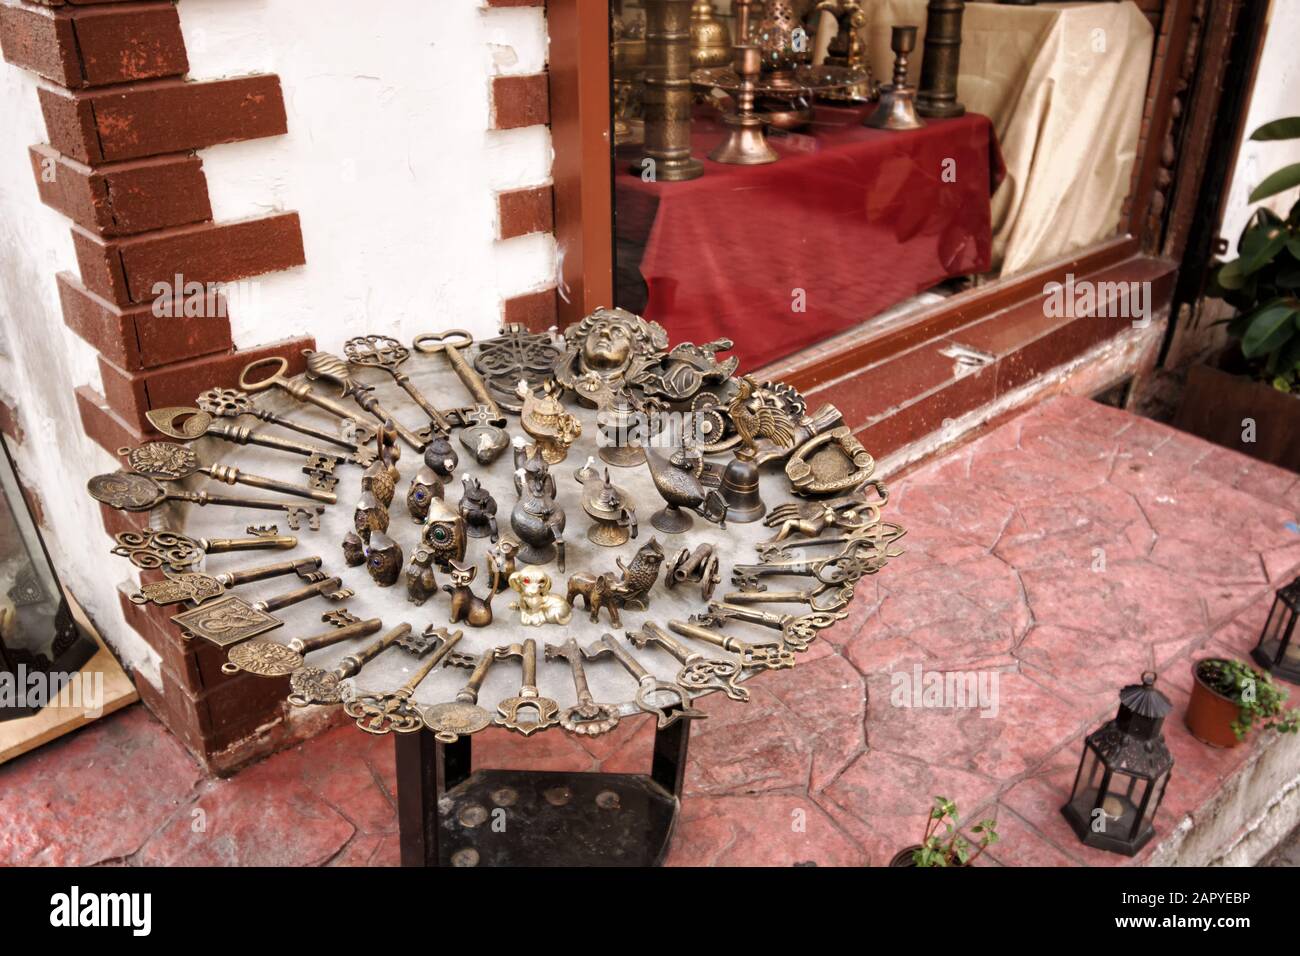 Istanbul, Turkey - January 14, 2020: Display of old metal keys and statuettes at antiques shop in Cukurcuma area of Cihangir, Beyoglu district of Ista Stock Photo